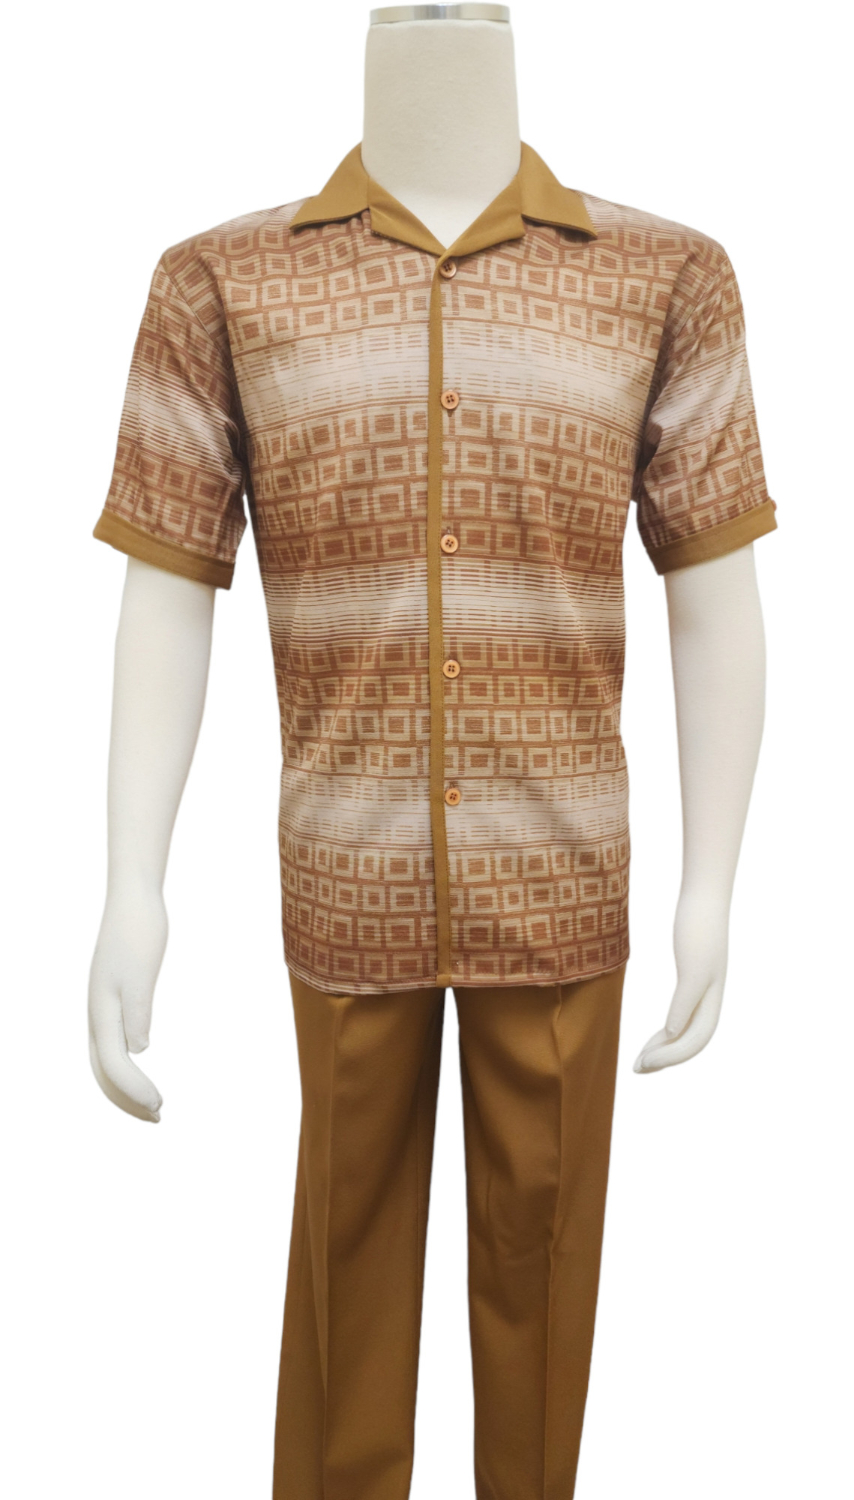 Pronti Caramel / Beige Geometric Design Short Sleeve Outfit SP6559